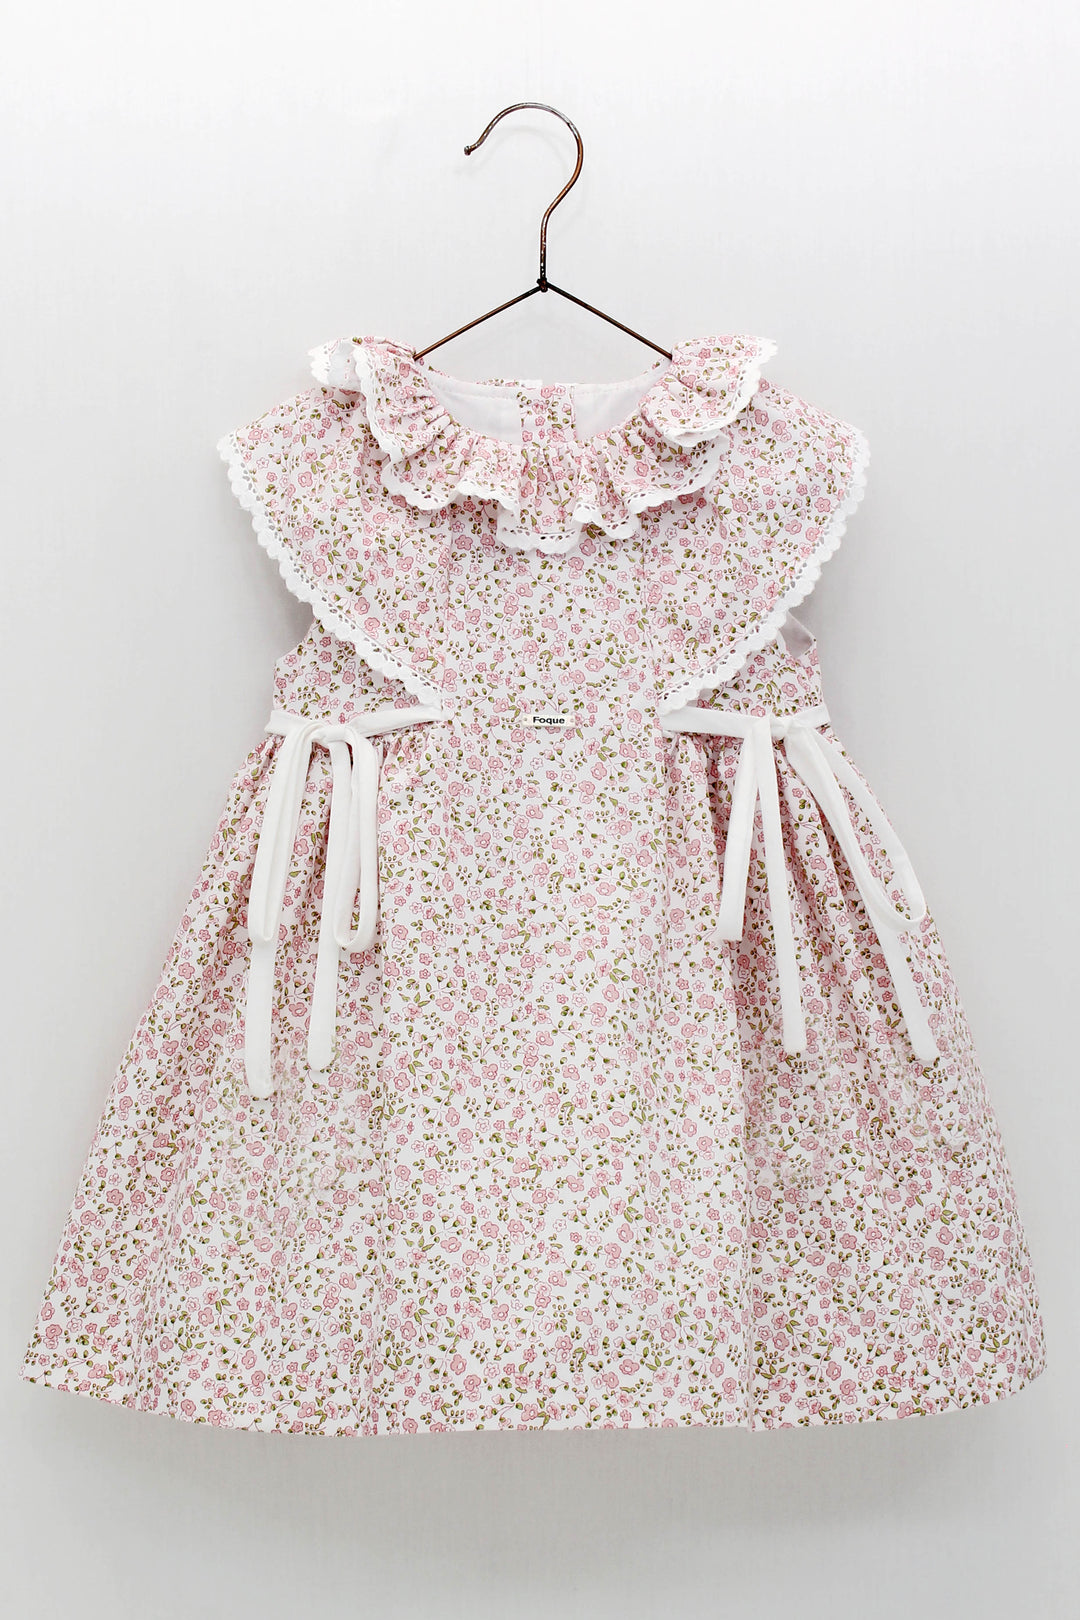 Foque "Lorena" Pink Floral Dress | Millie and John